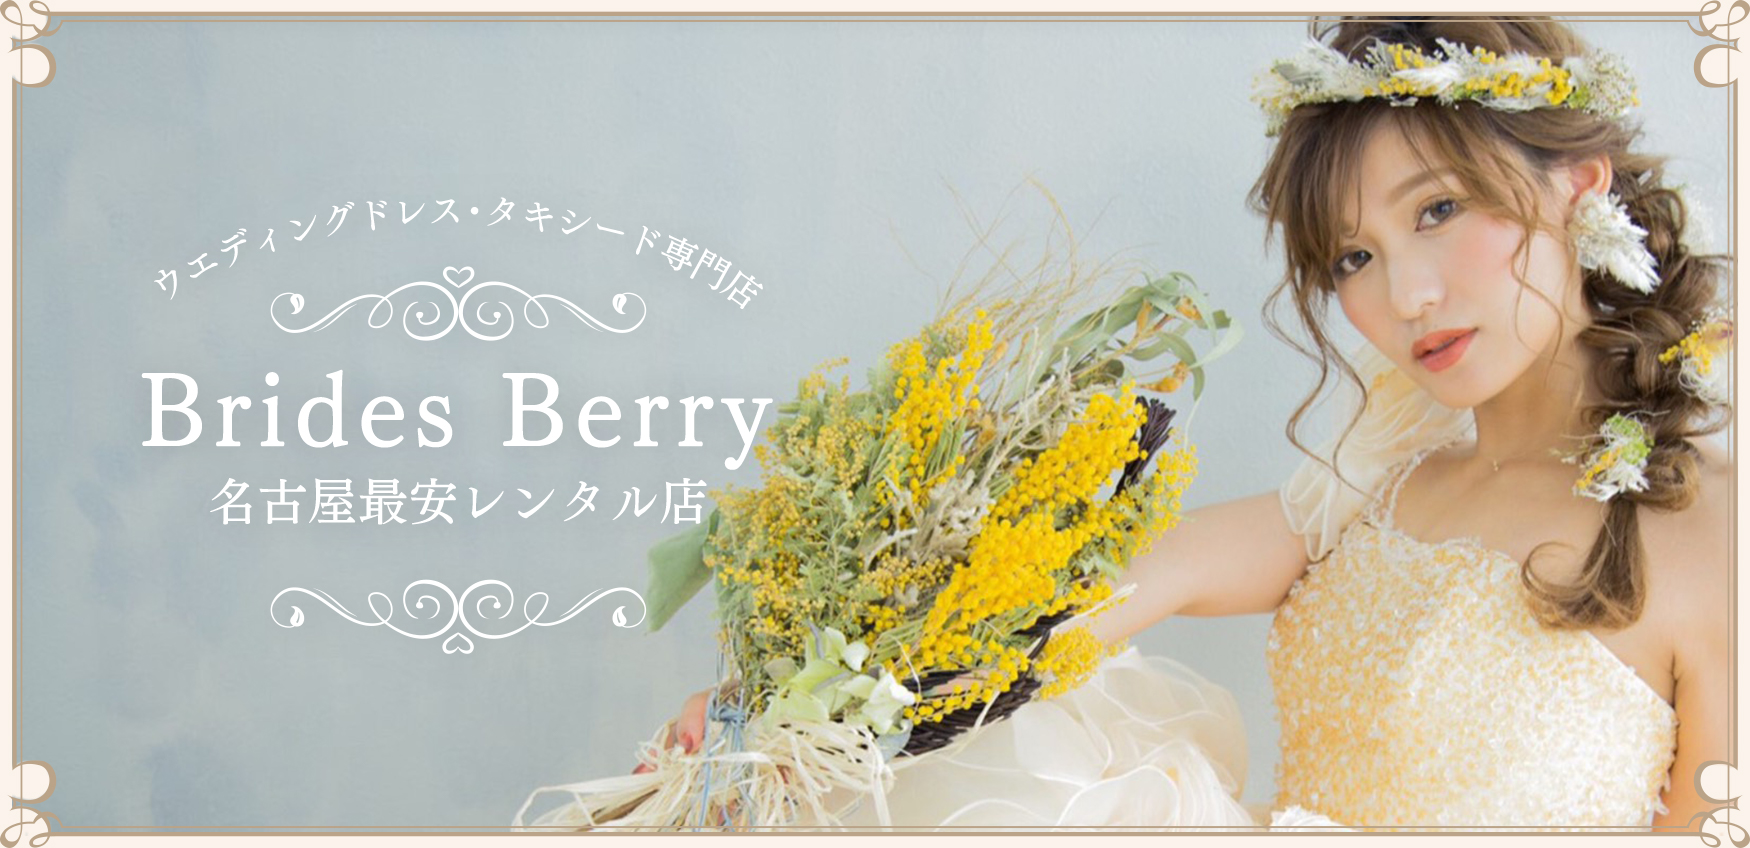 Brides Berry